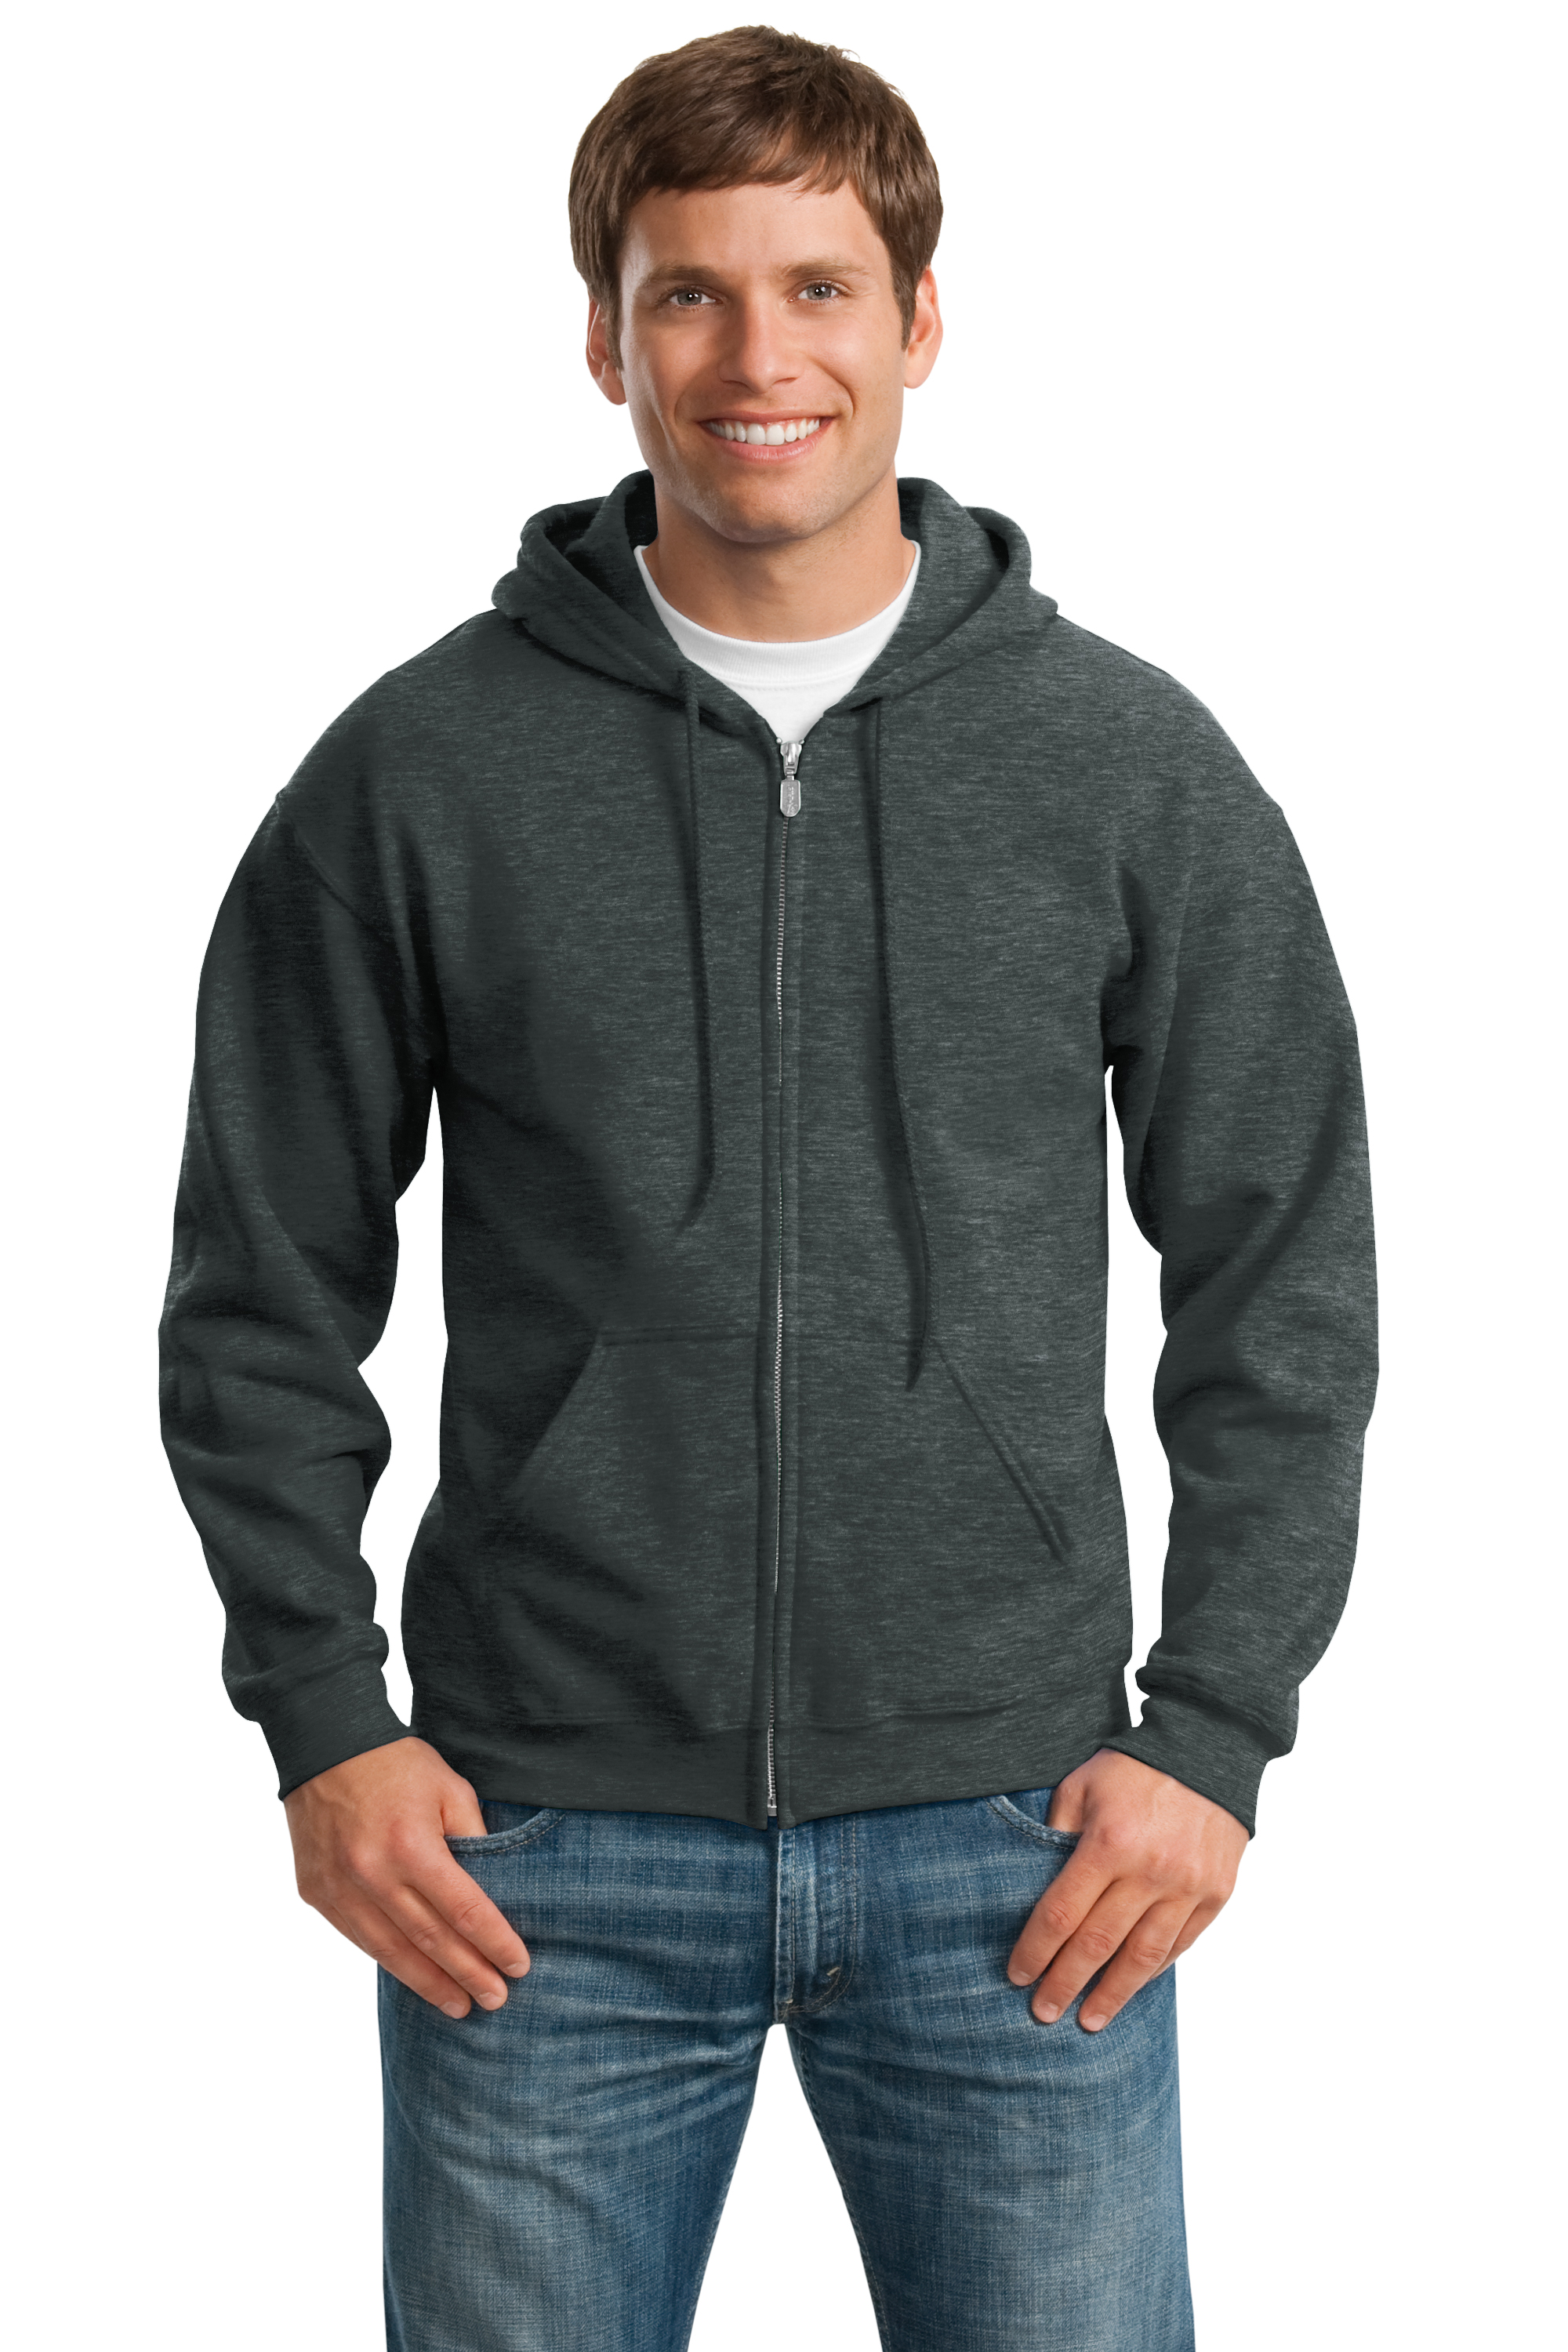 Gildan Unisex Heavy Blend Fleece Hooded Sweatshirt, Size Small to 3XL 